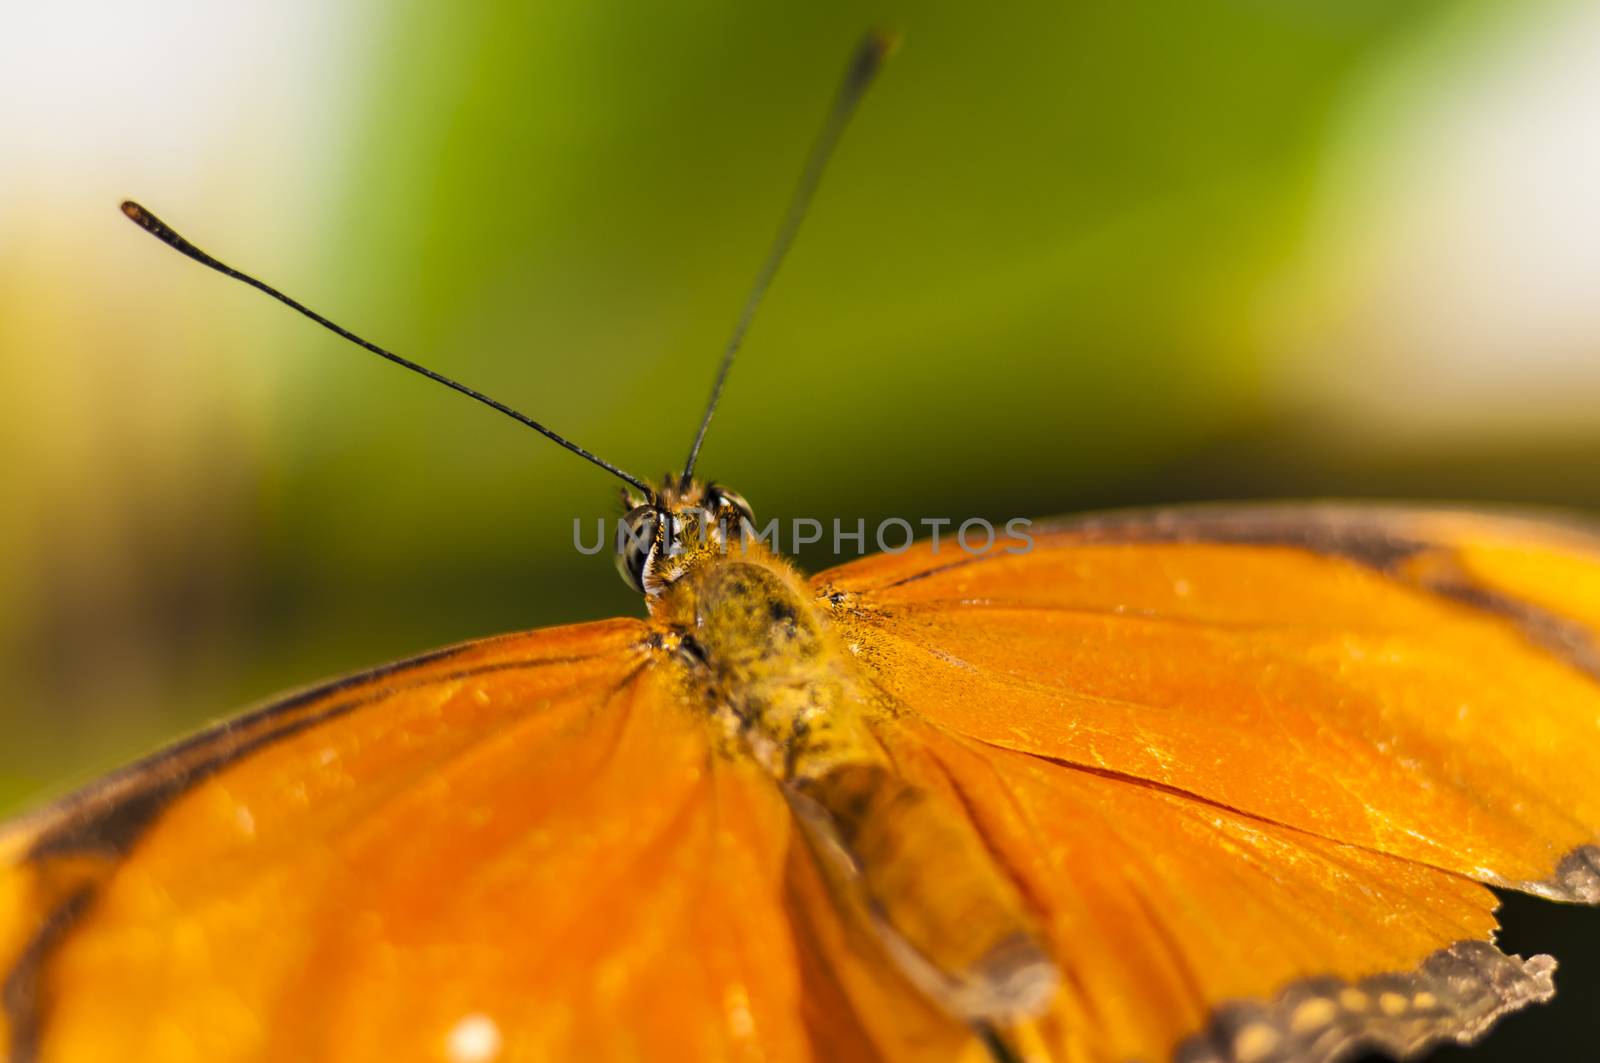 Butterfly by vladikpod